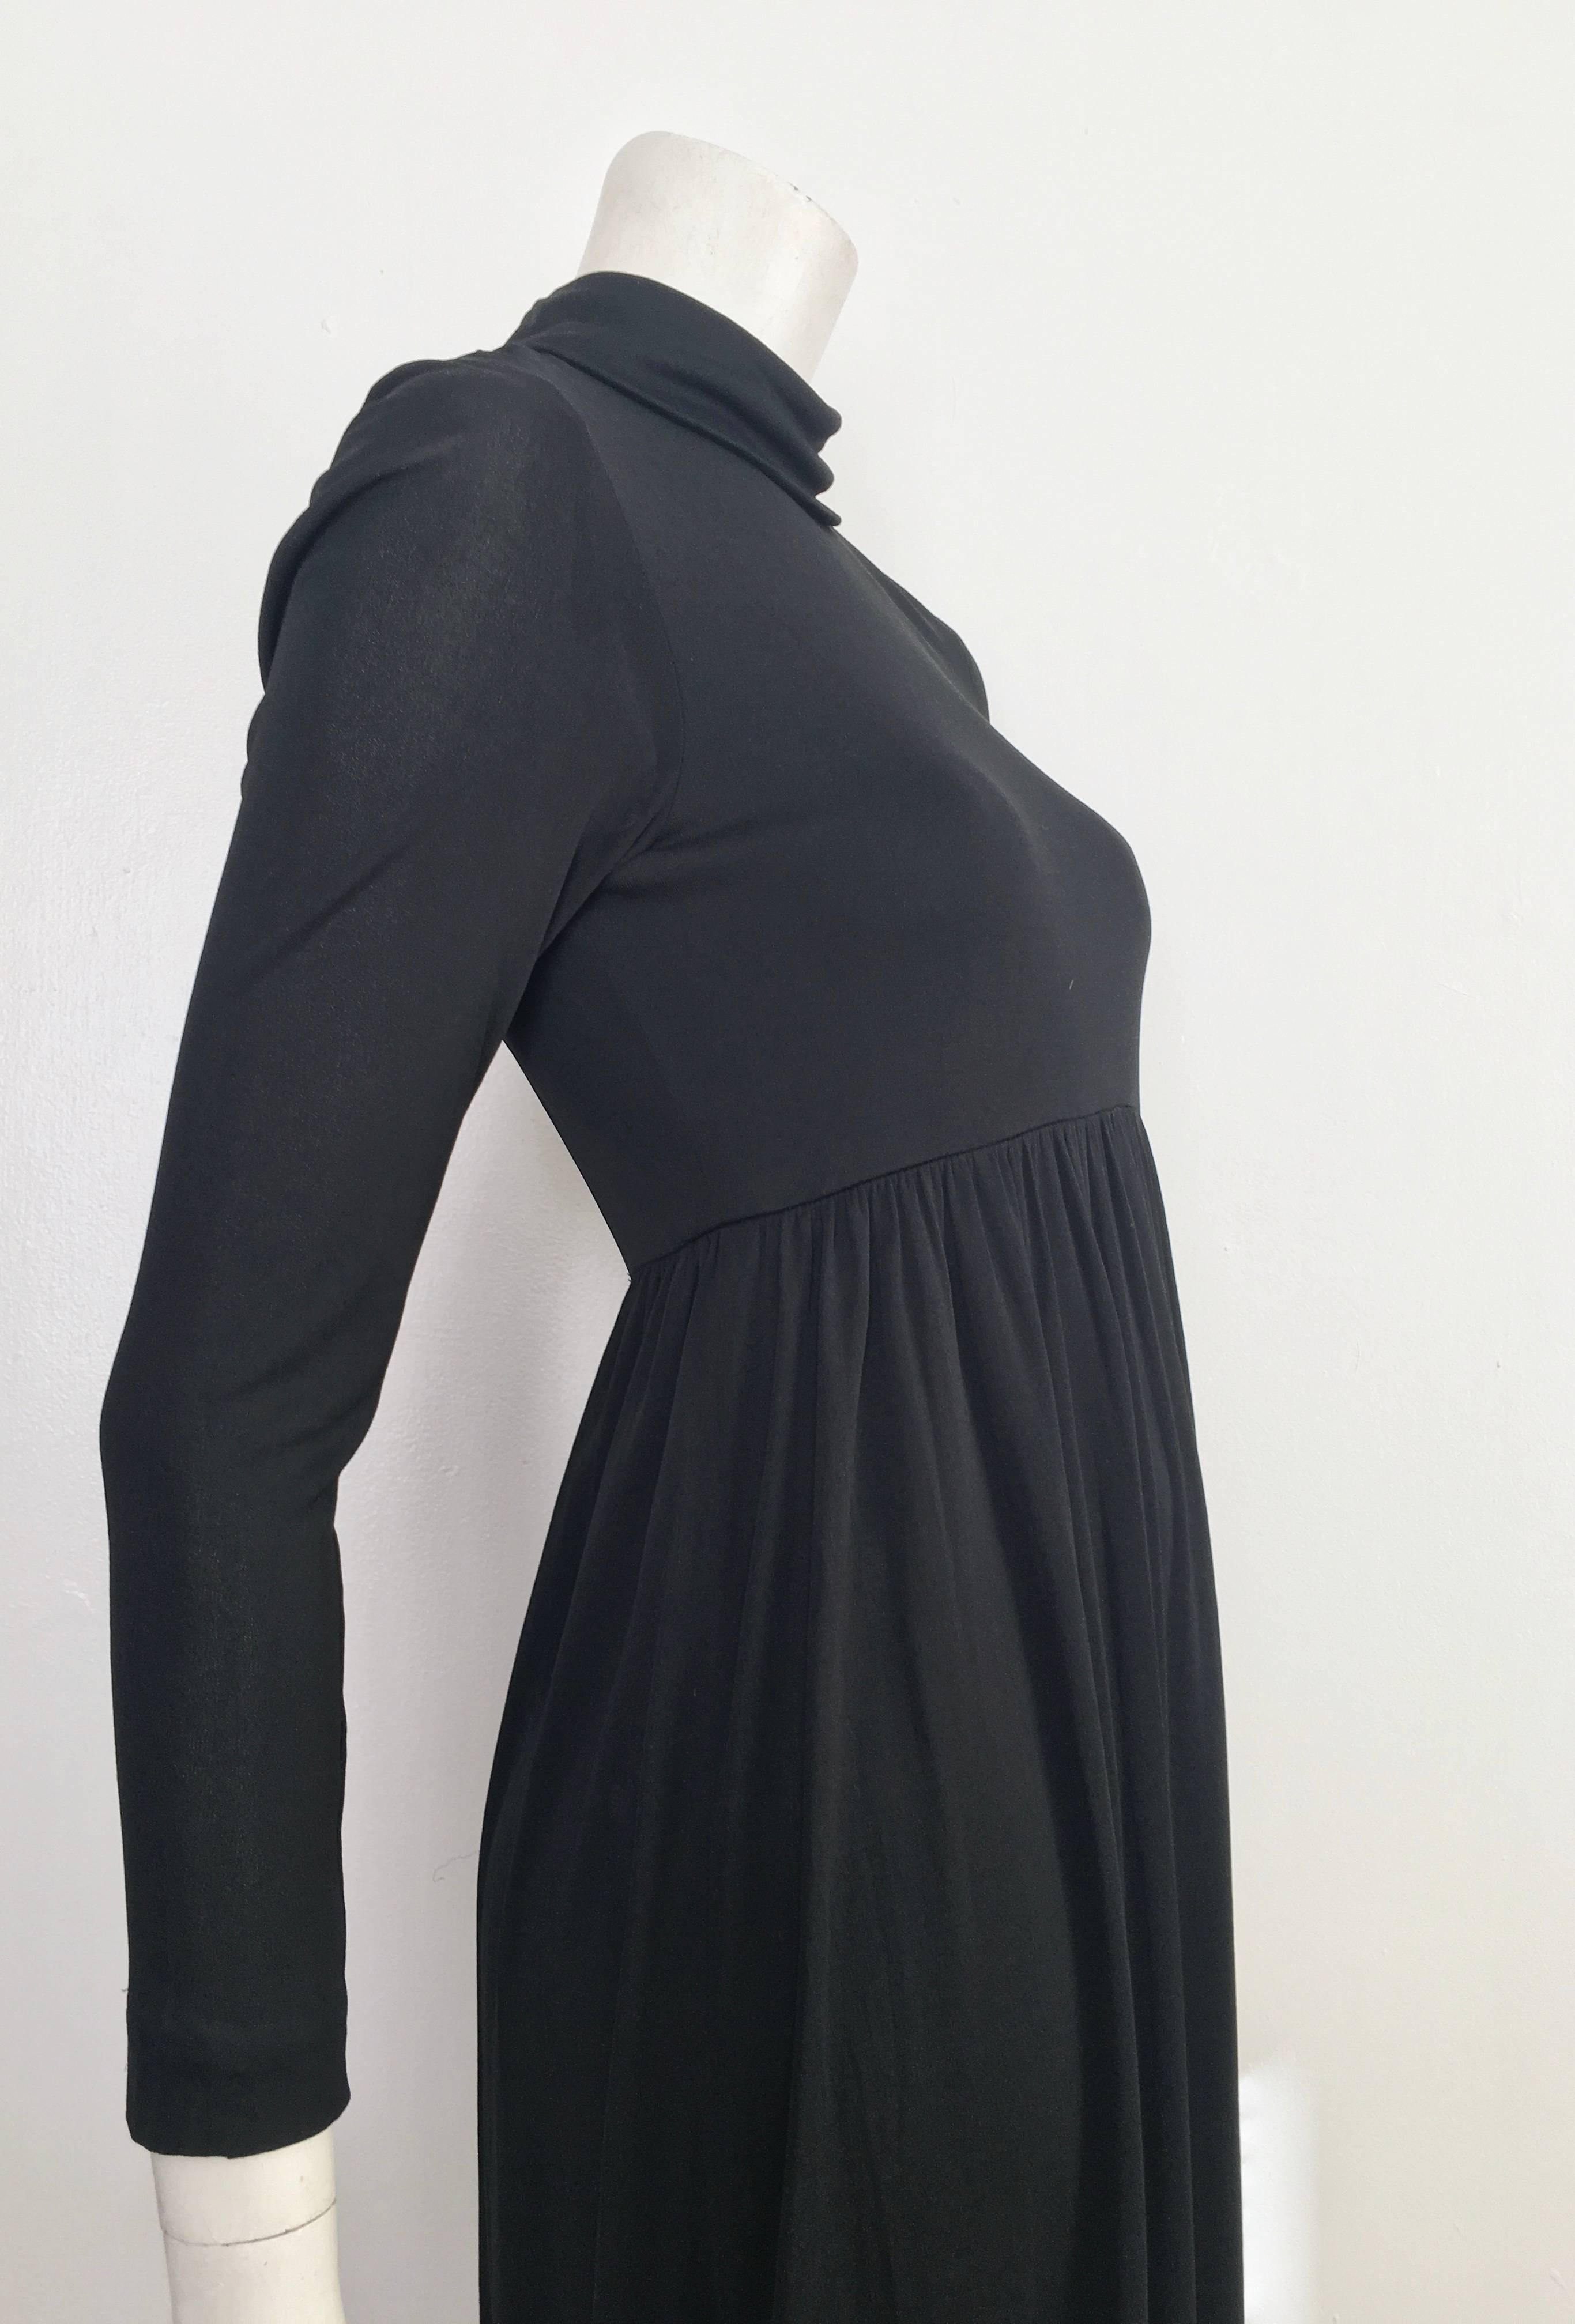 Joseph Magnin 1960s Black Jersey Maxi Dress Size 4.  For Sale 1